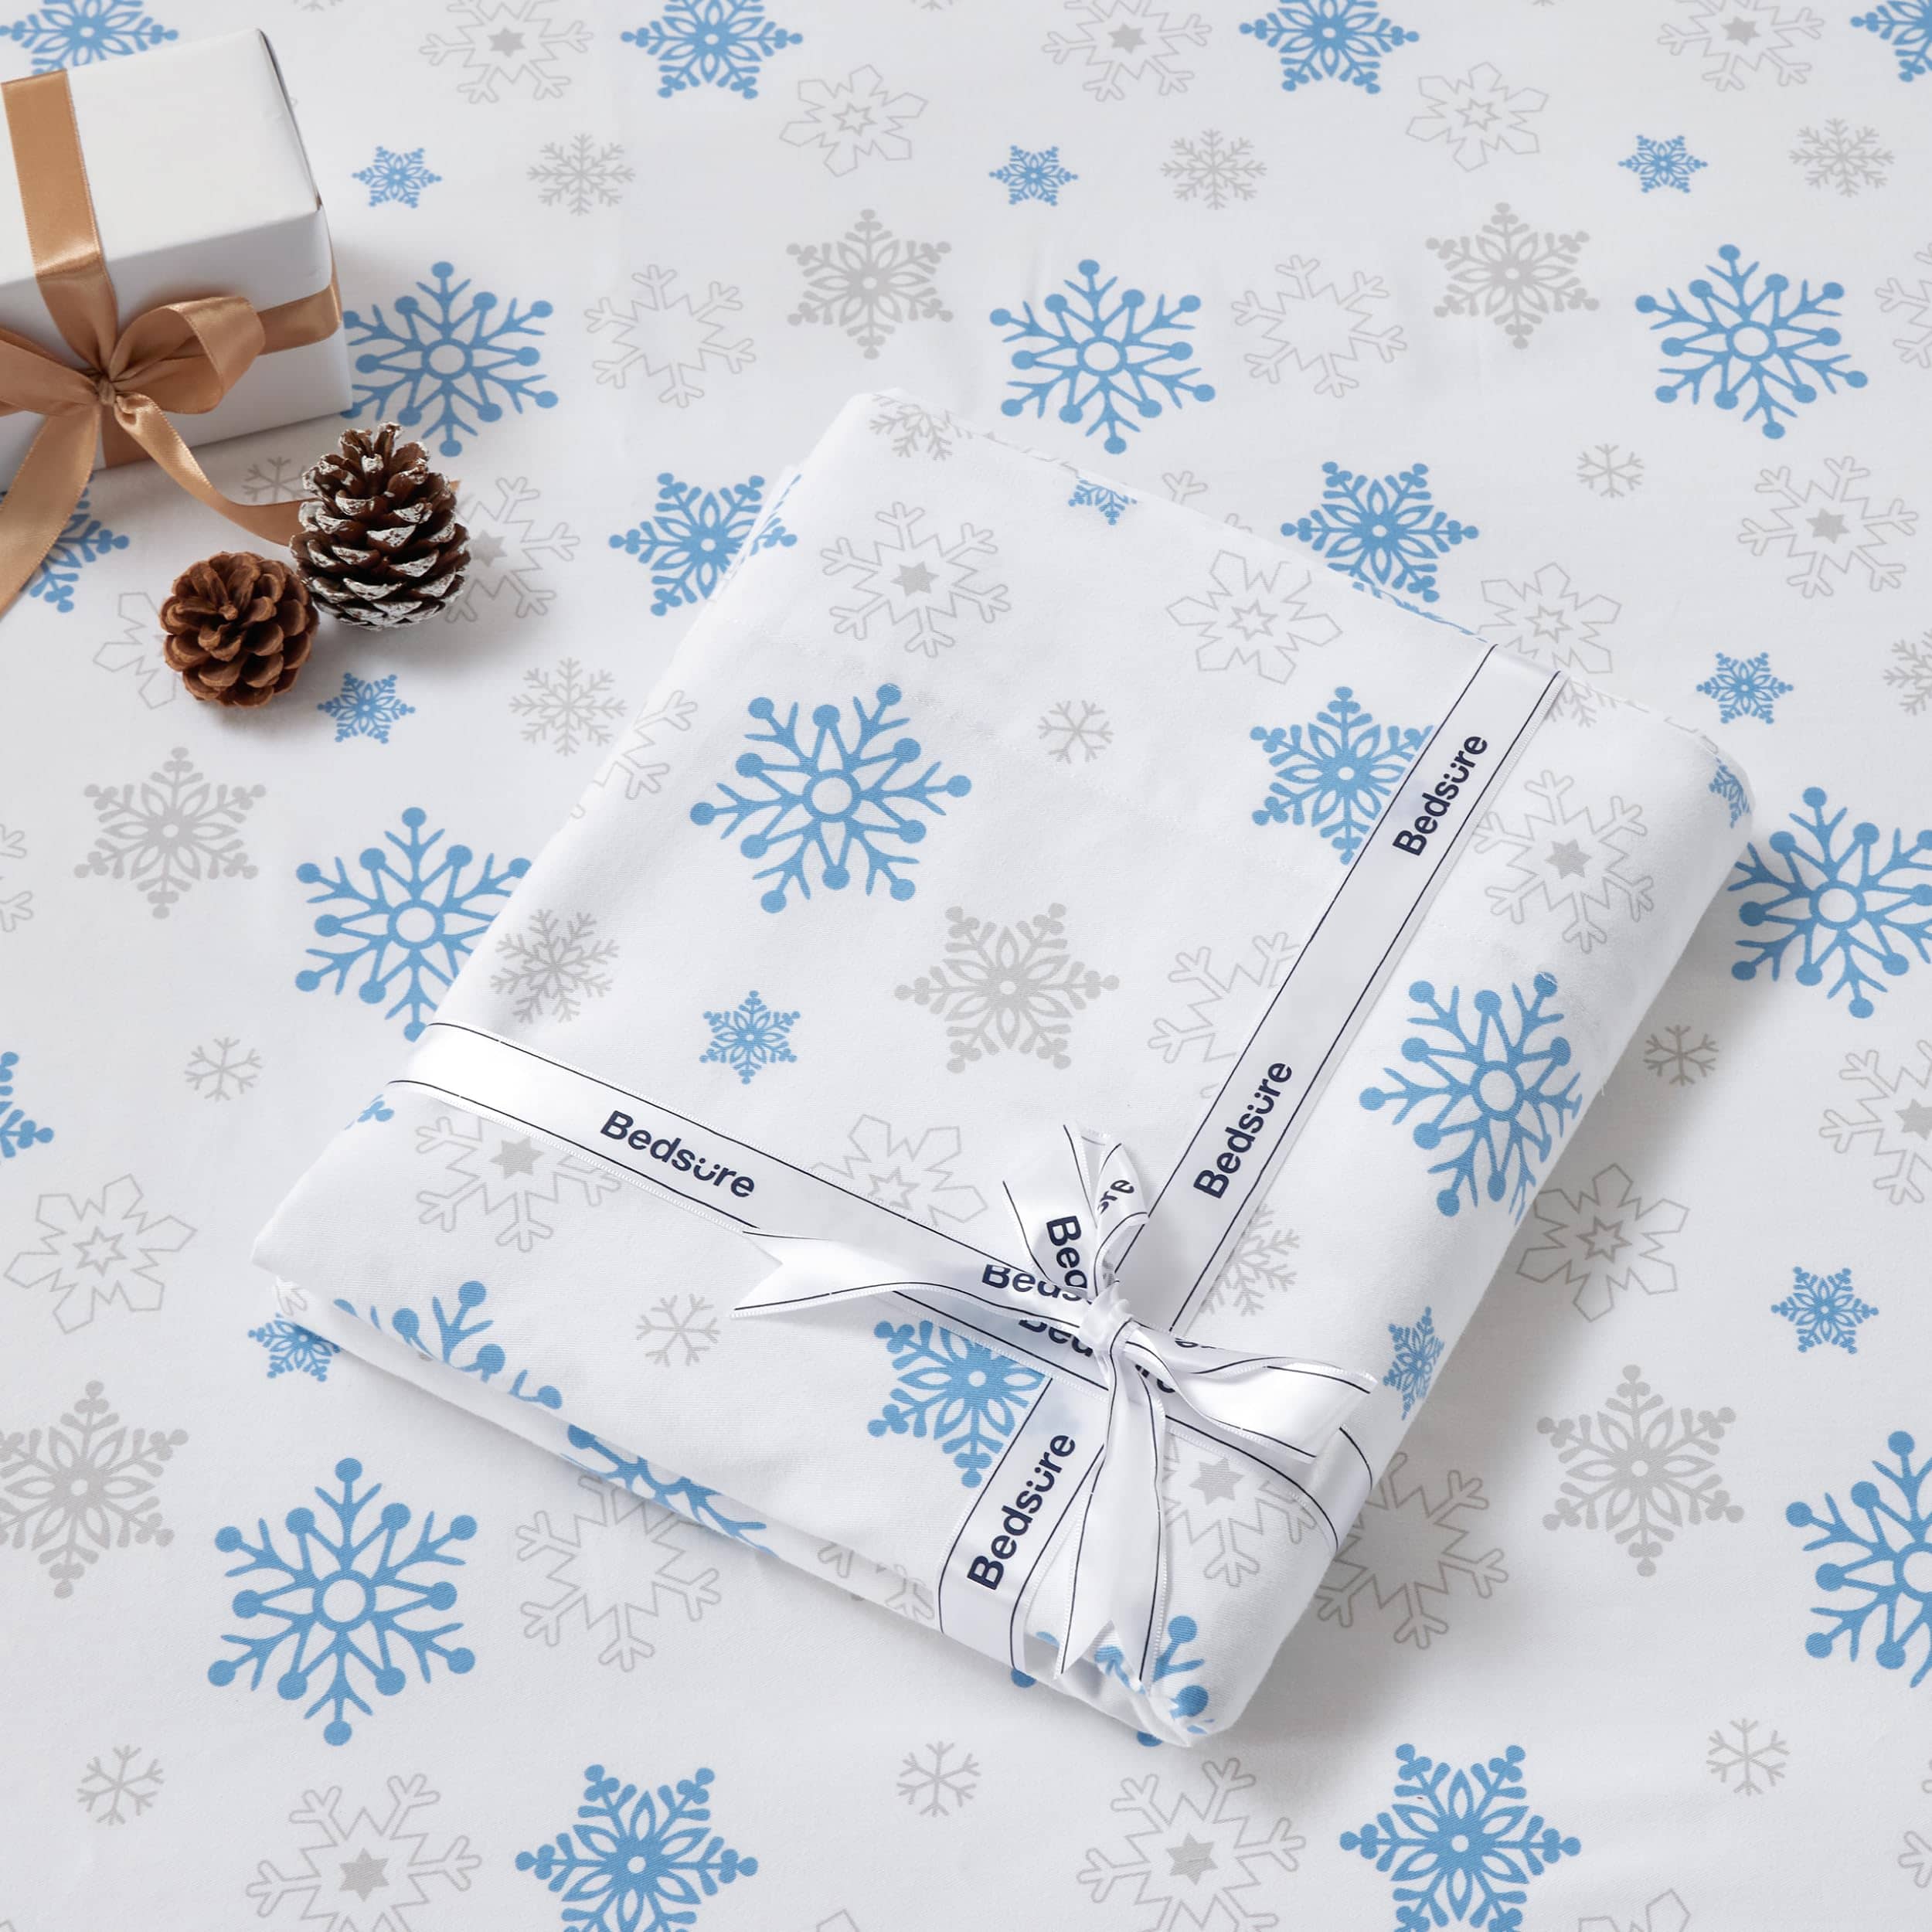 100% Cotton Snowflake Printed Flannel Sheet Set